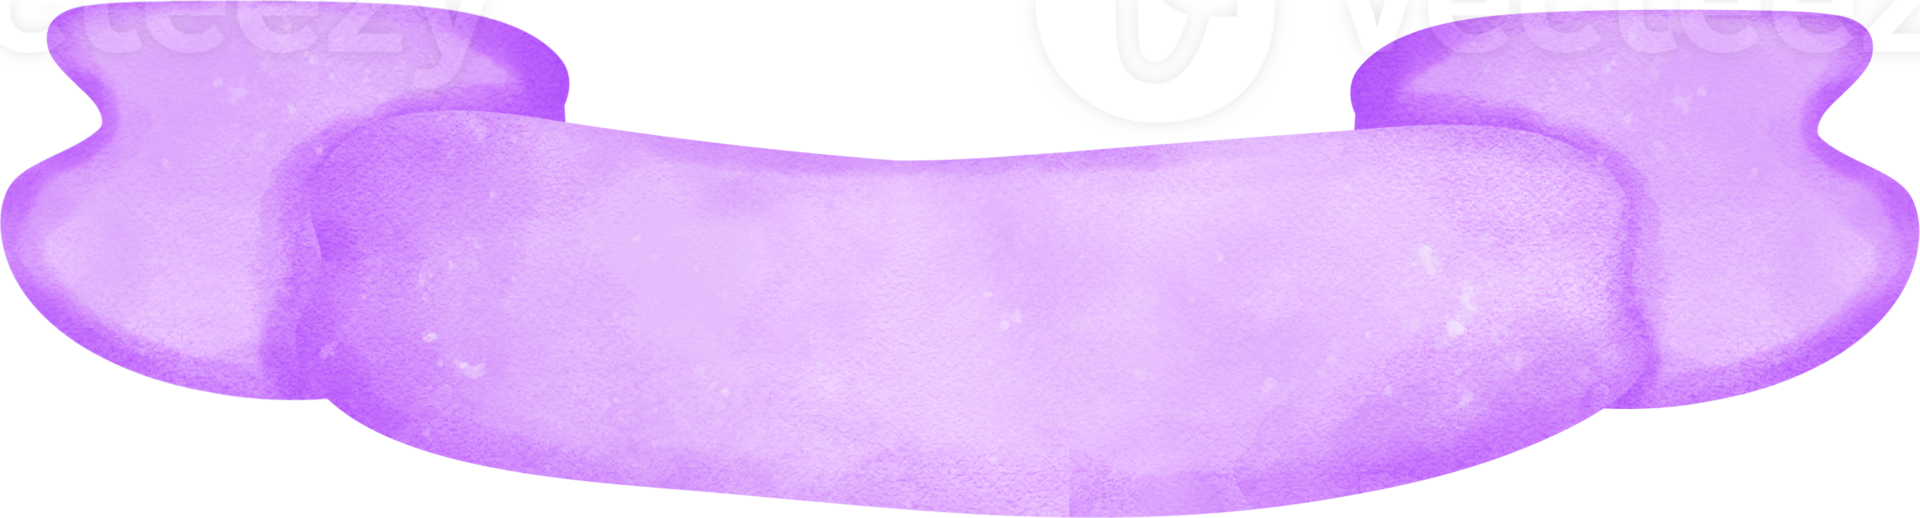 linda magia púrpura bandera acuarela cinta pintura png